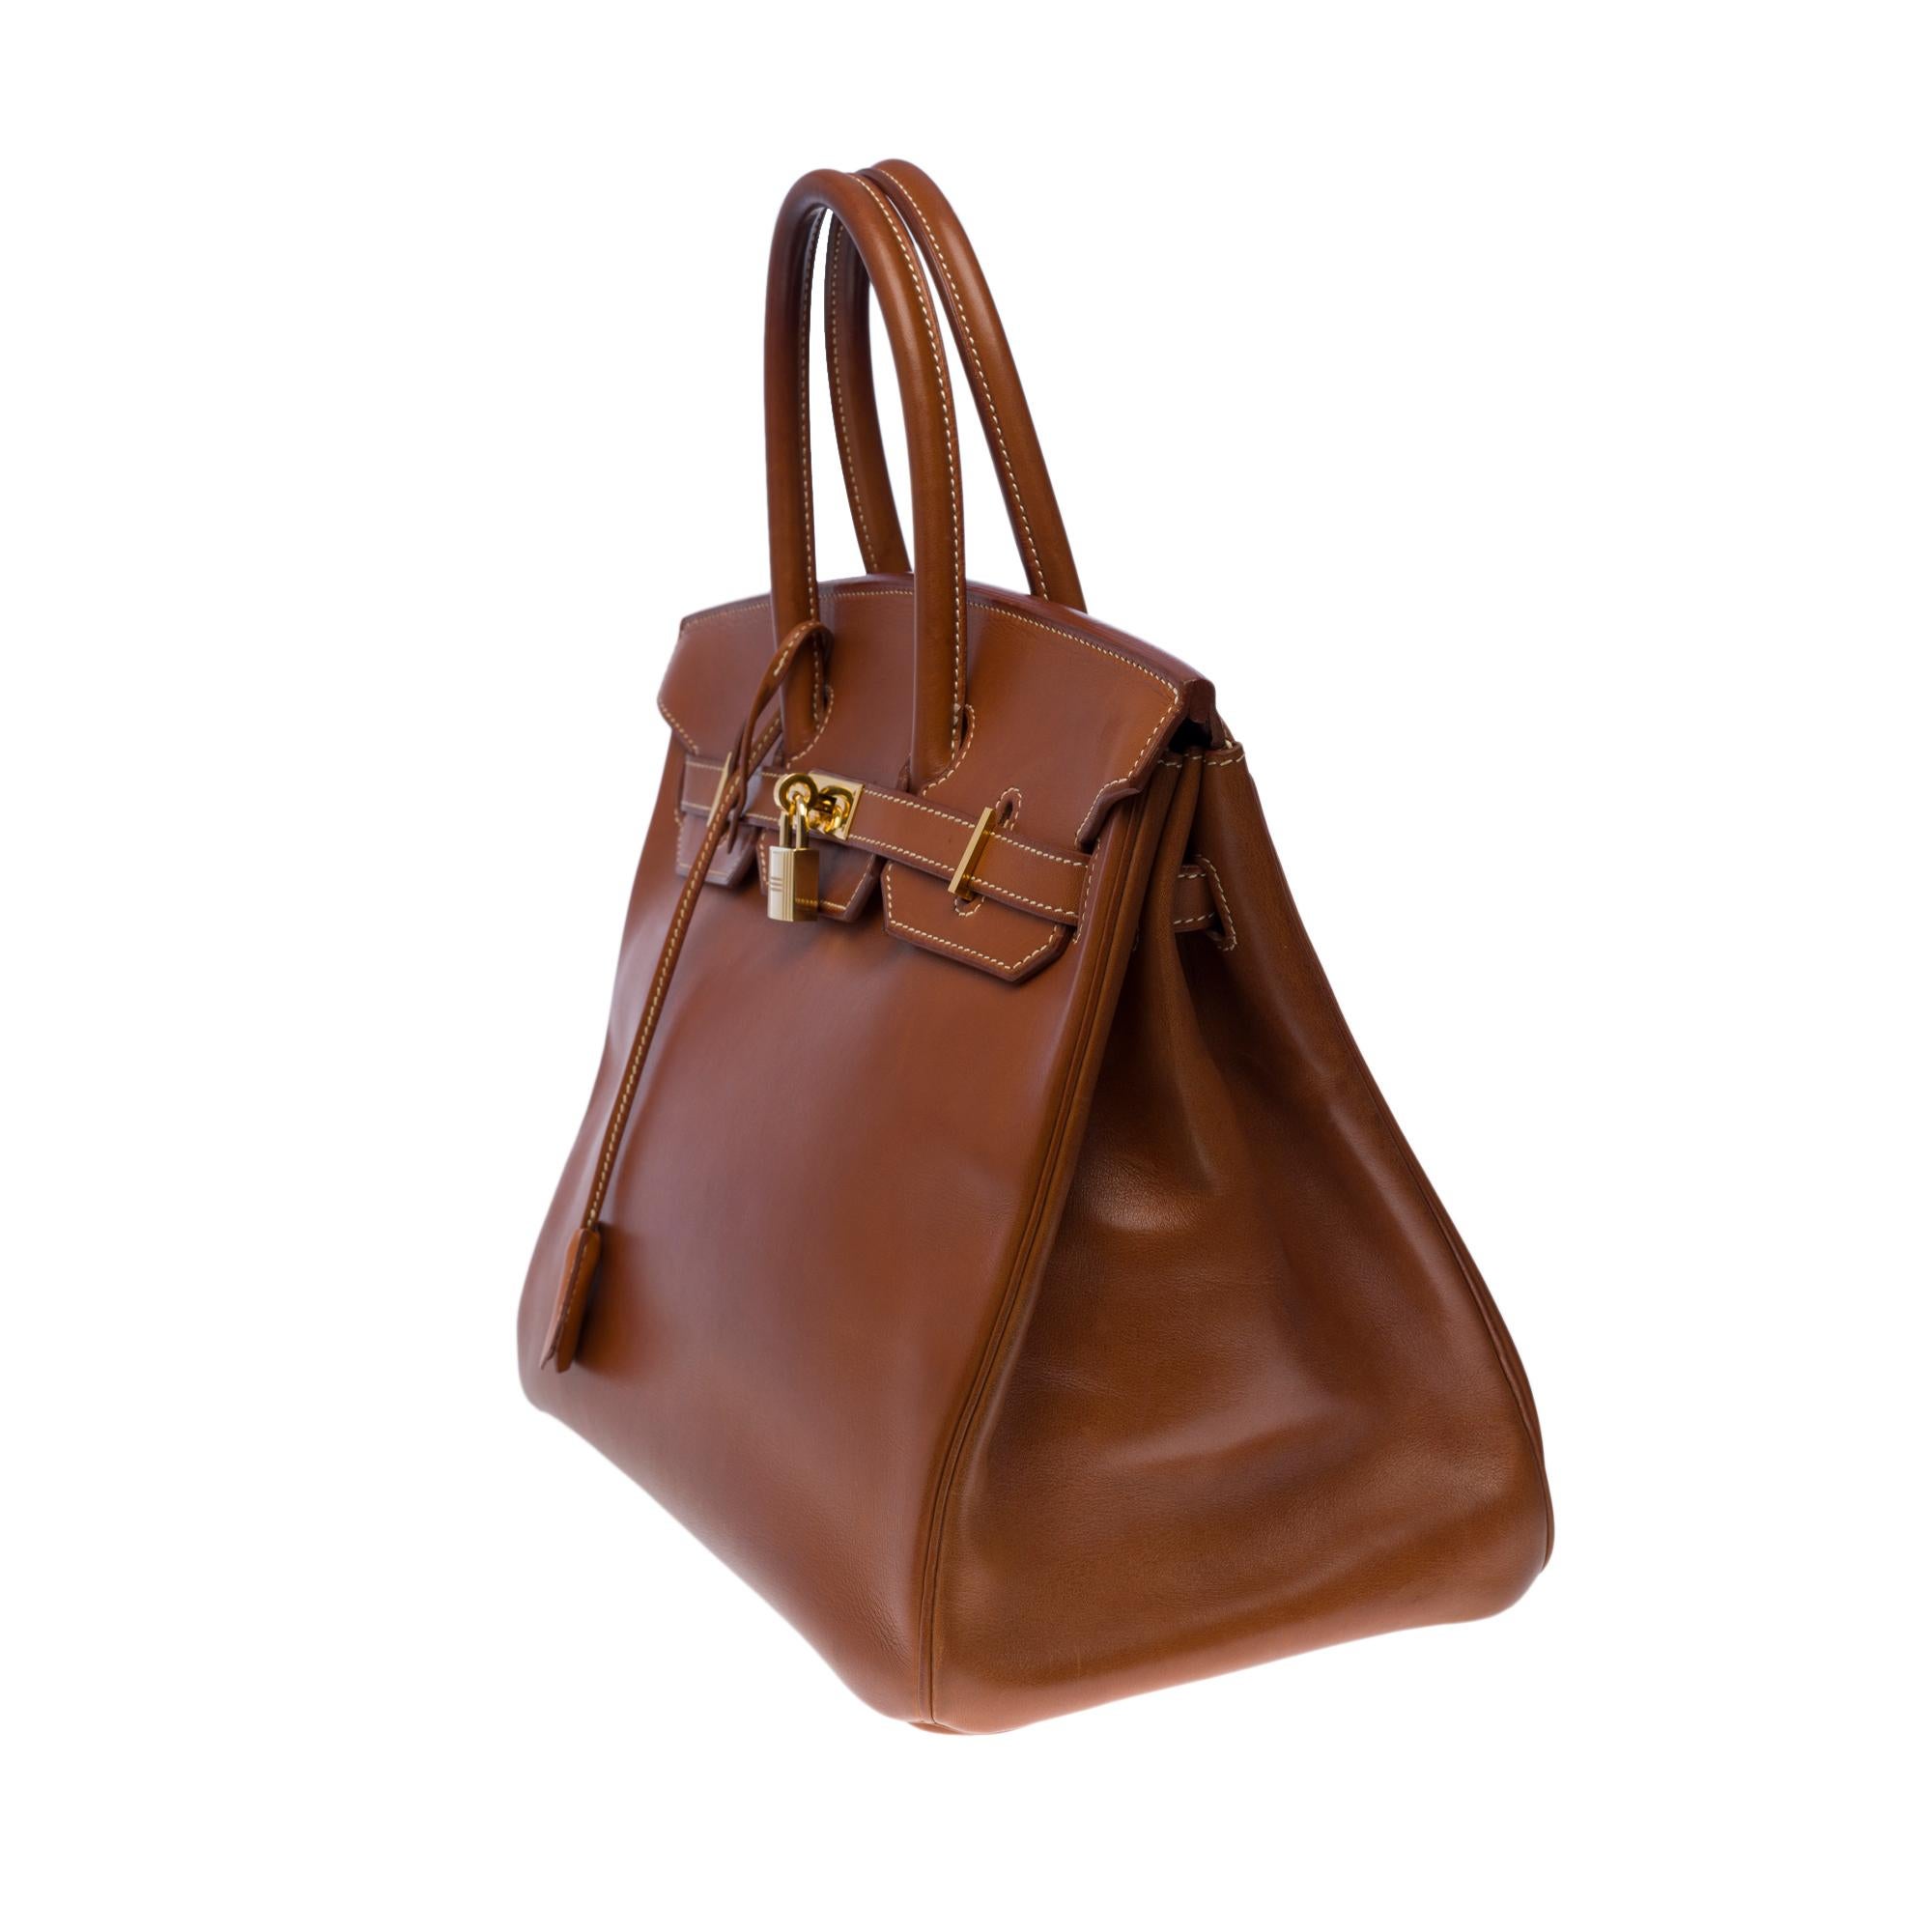 Rare and Exceptional Hermès Birkin 35 handbag in Gold Barenia leather ...